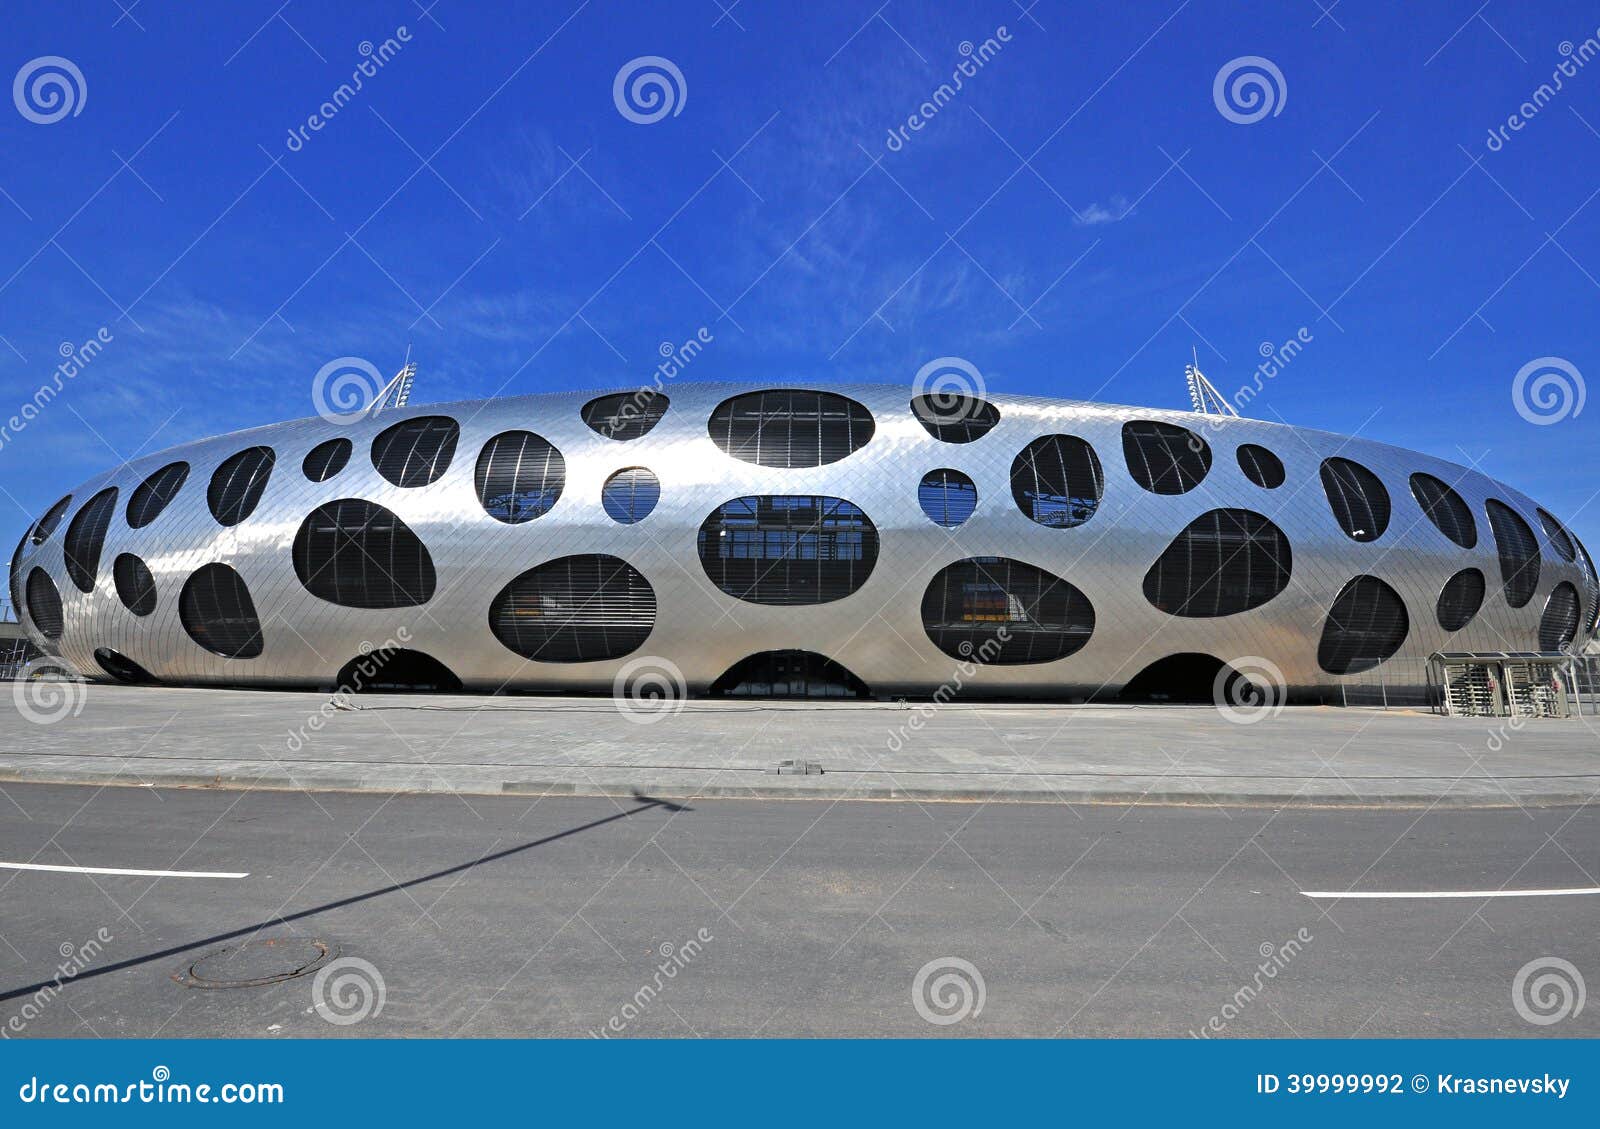 borisov-arena-belarus-april-new-footbal-stadium-town-april-soccer-specific-stadium-39999992.jpg